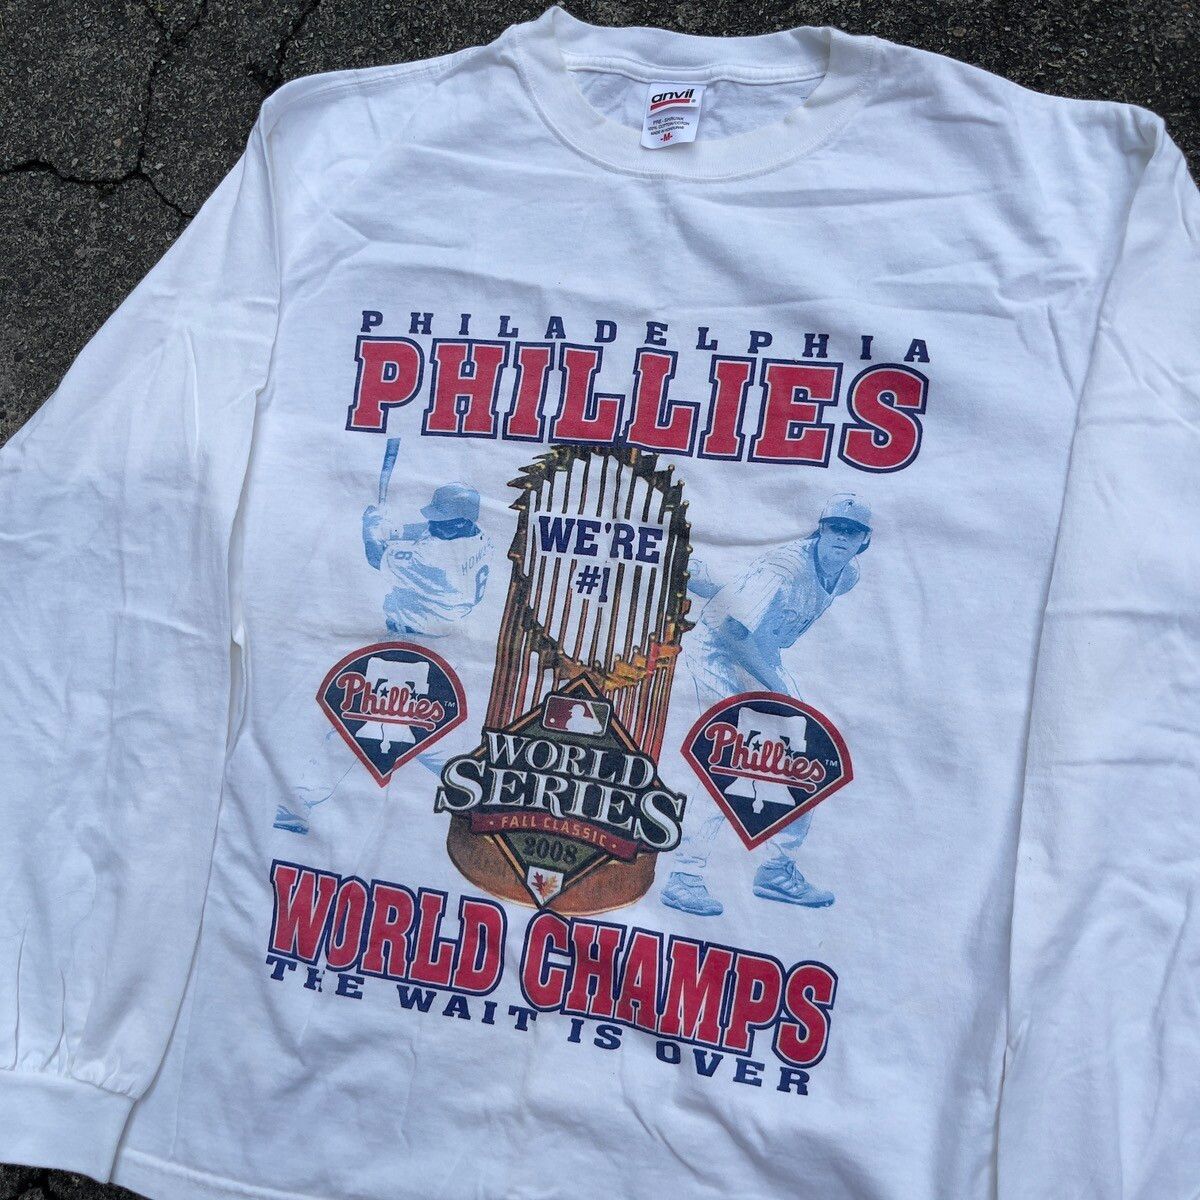 Vintage 2008 Philadelphia Fans Champions Sports Long Sleeve Shirt Size US XL / EU 56 / 4 - 2 Preview